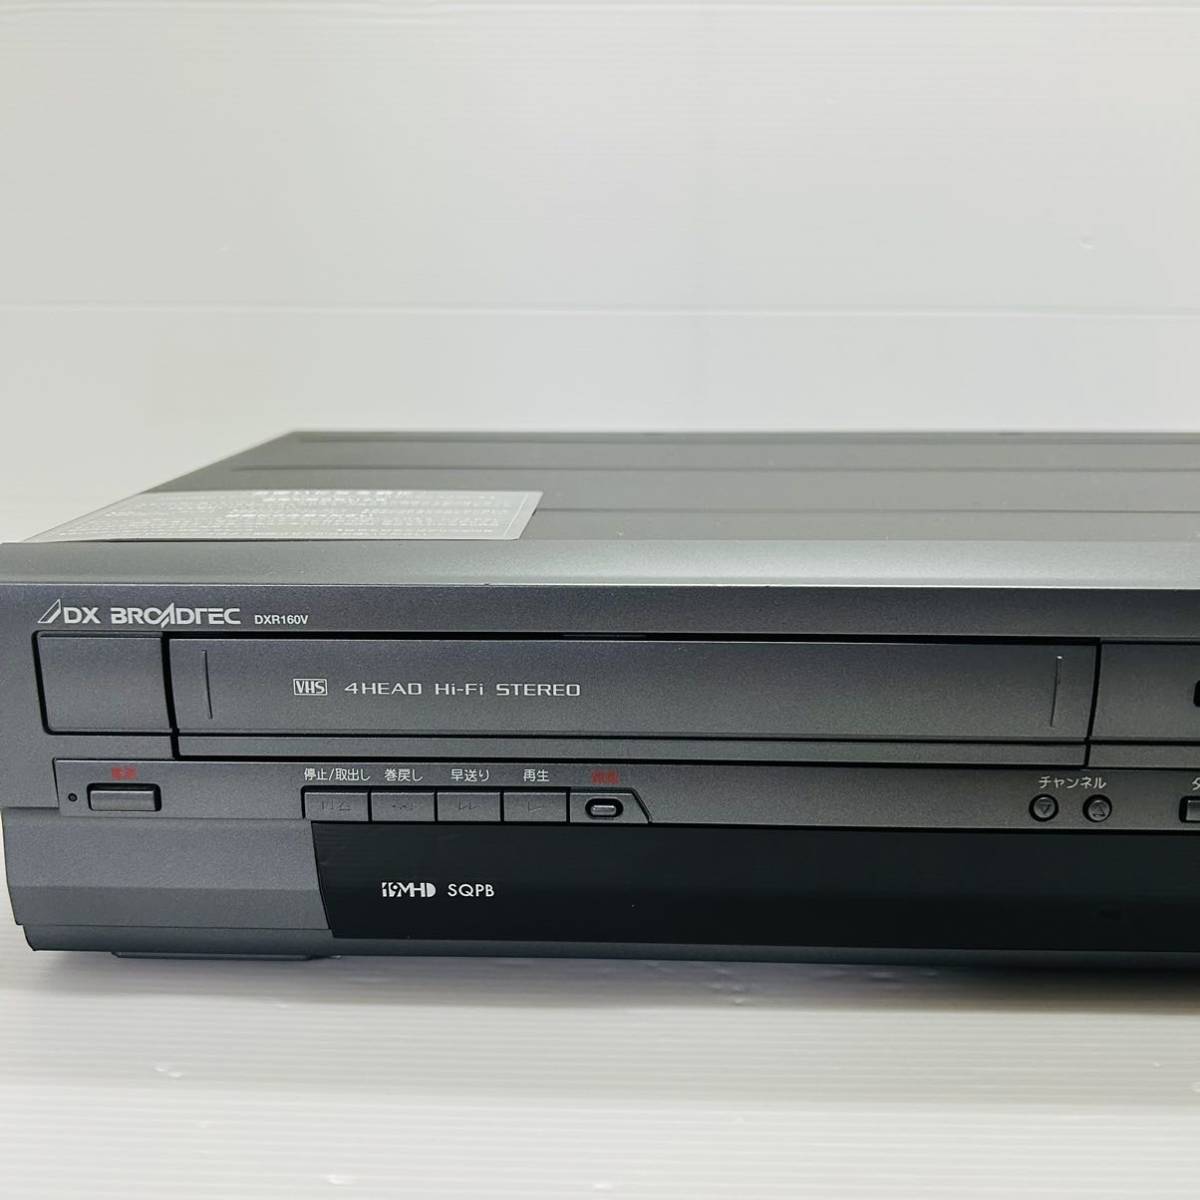 DXアンテナ DXR160v DVD VHS複合機 録画・ダビングOK - 映像機器